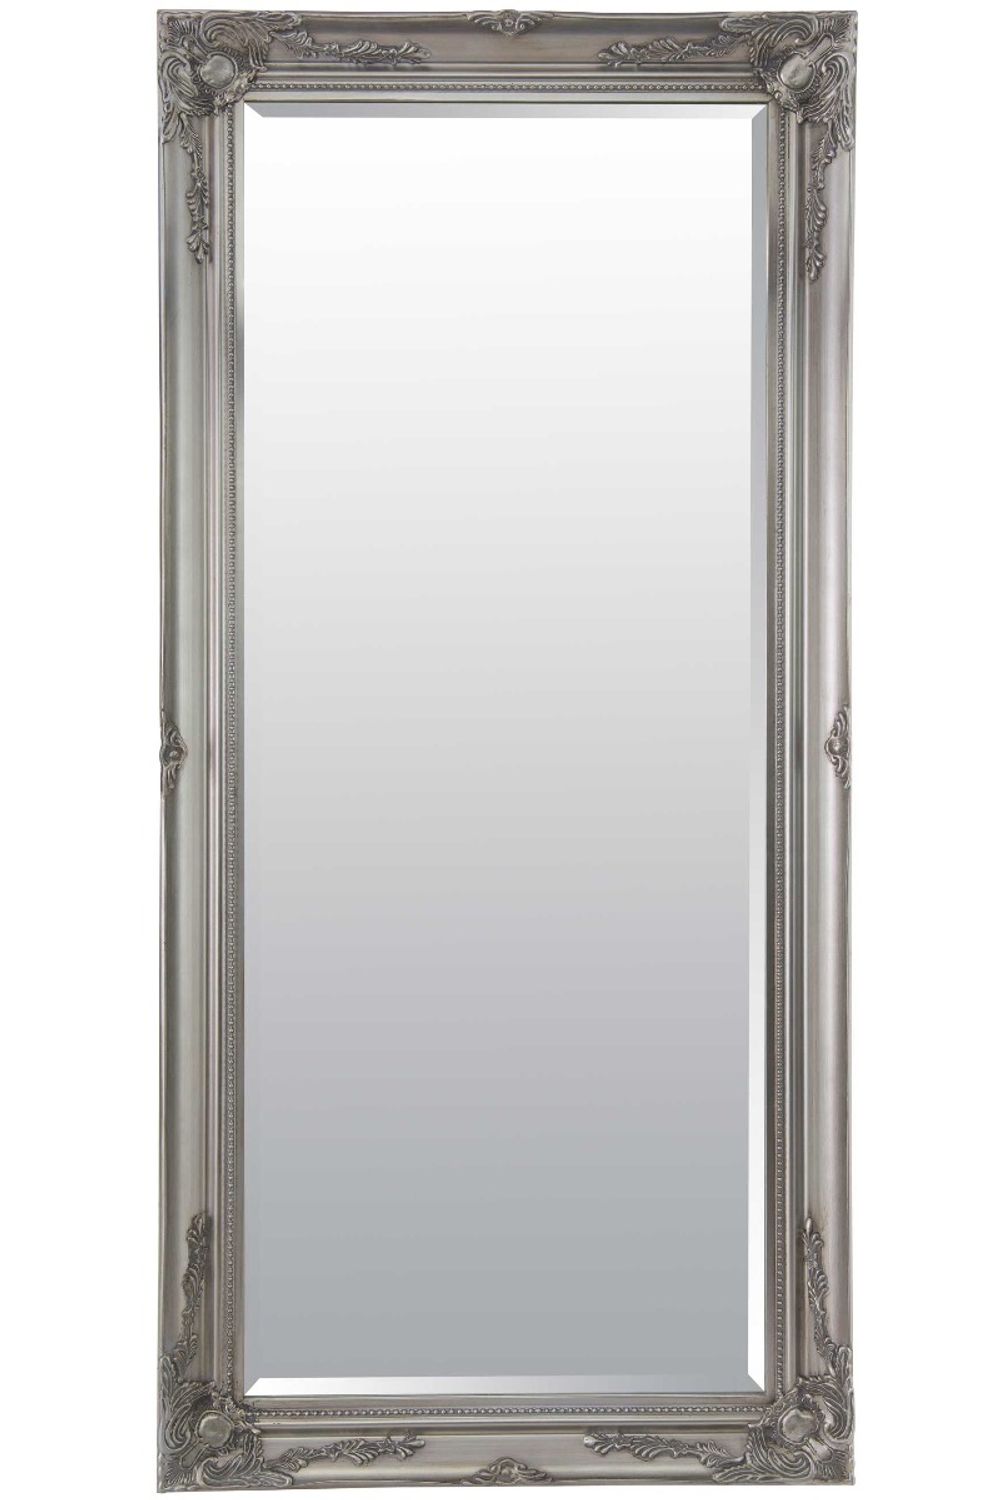 silver frame vintage mirror